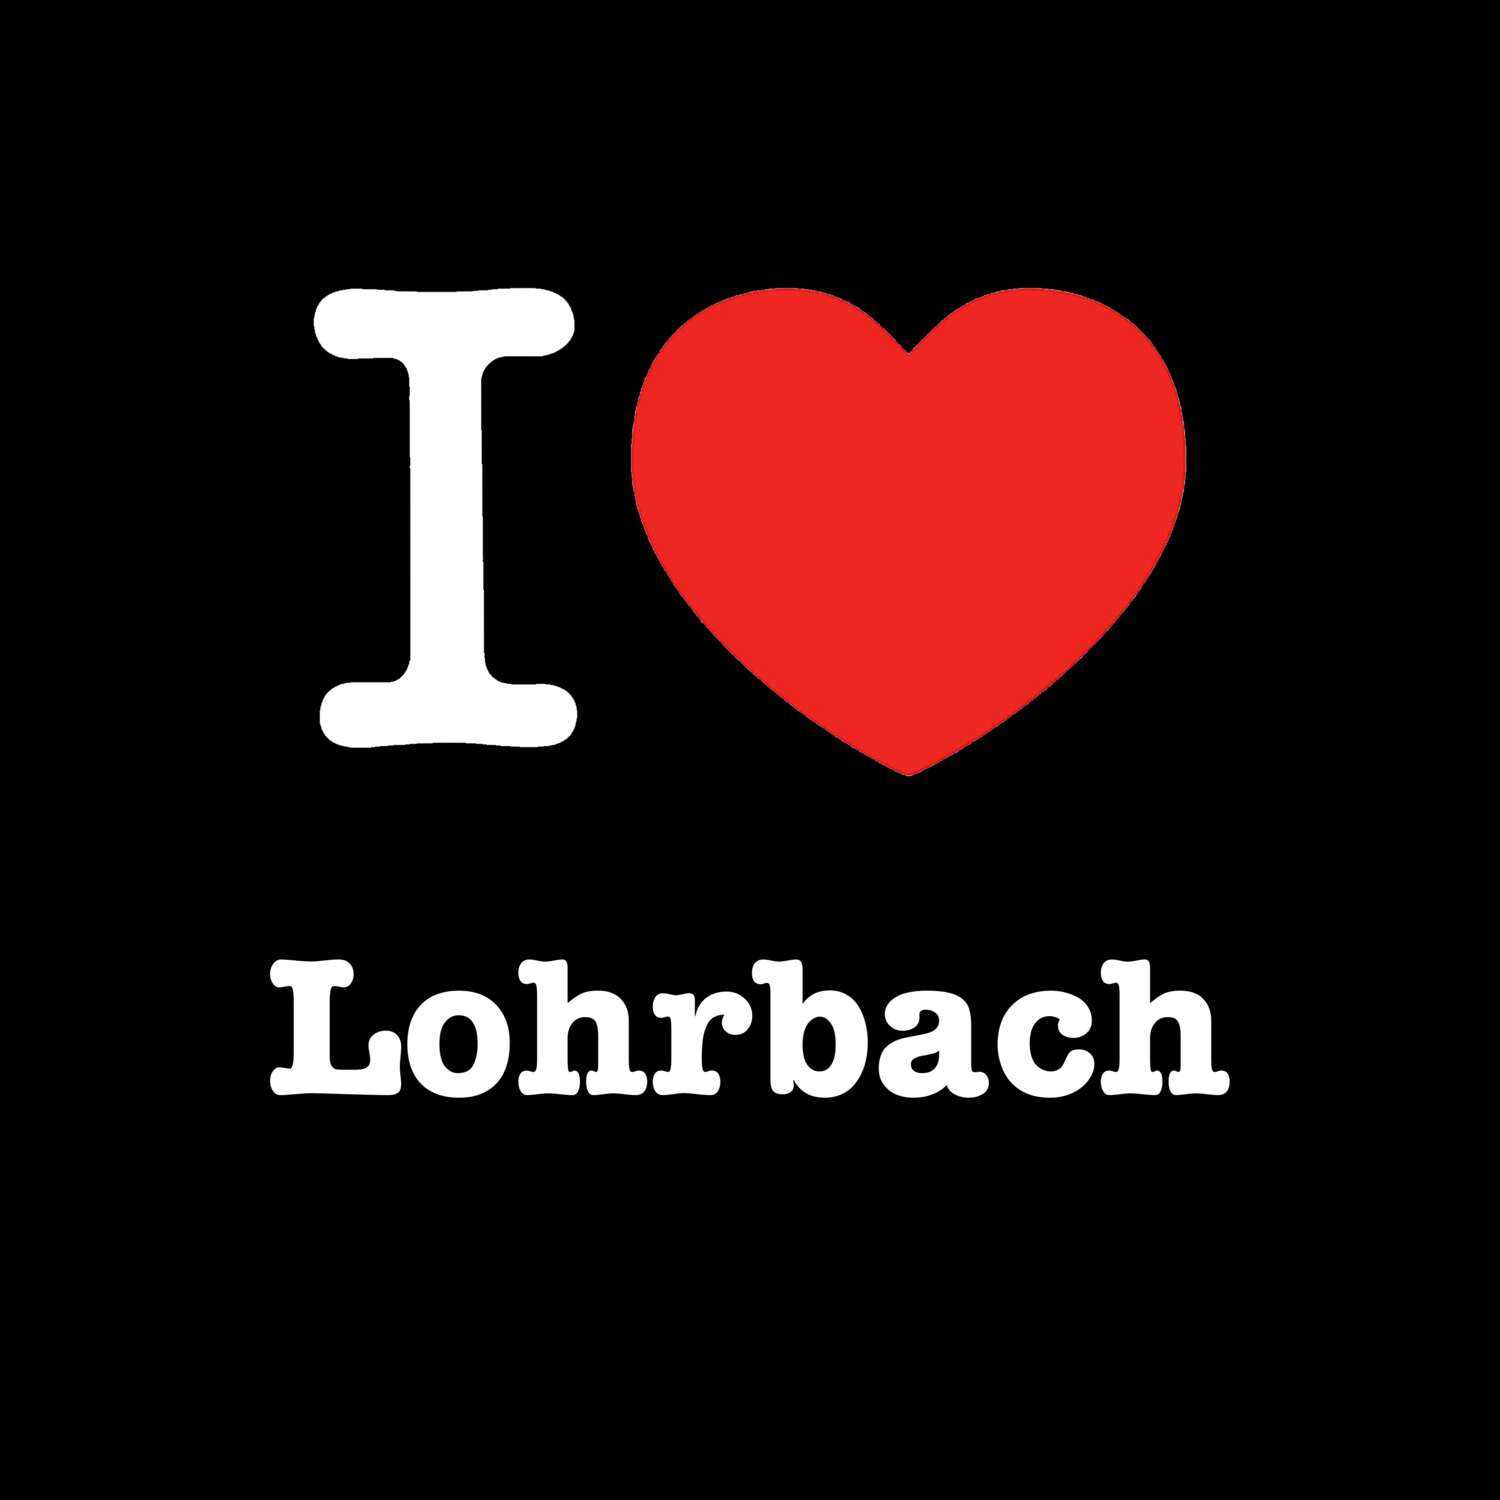 Lohrbach T-Shirt »I love«